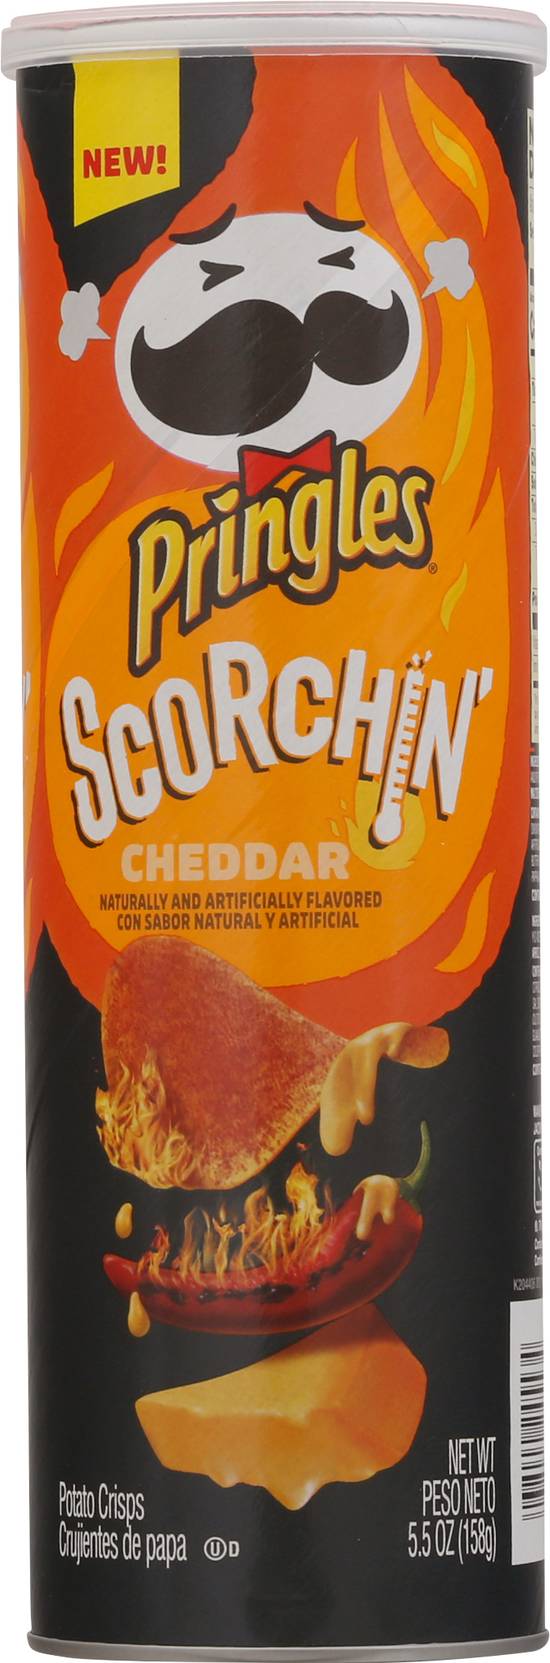 Pringles Scorchin' Potato Crisps (cheddar)